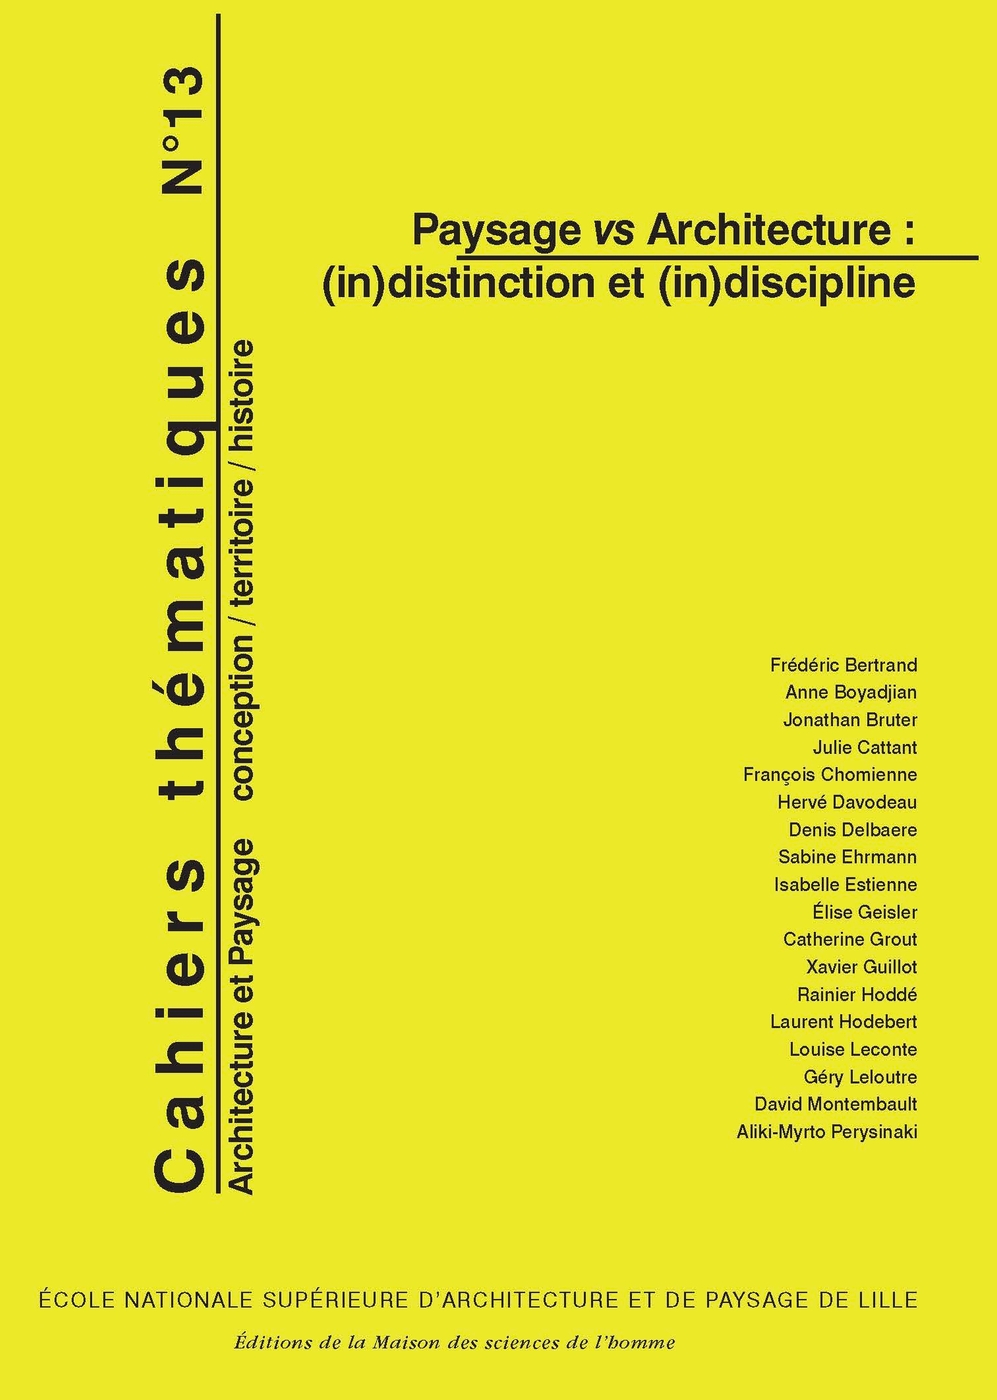 Paysage vs Architecture : (in)discipline et (in)distinction